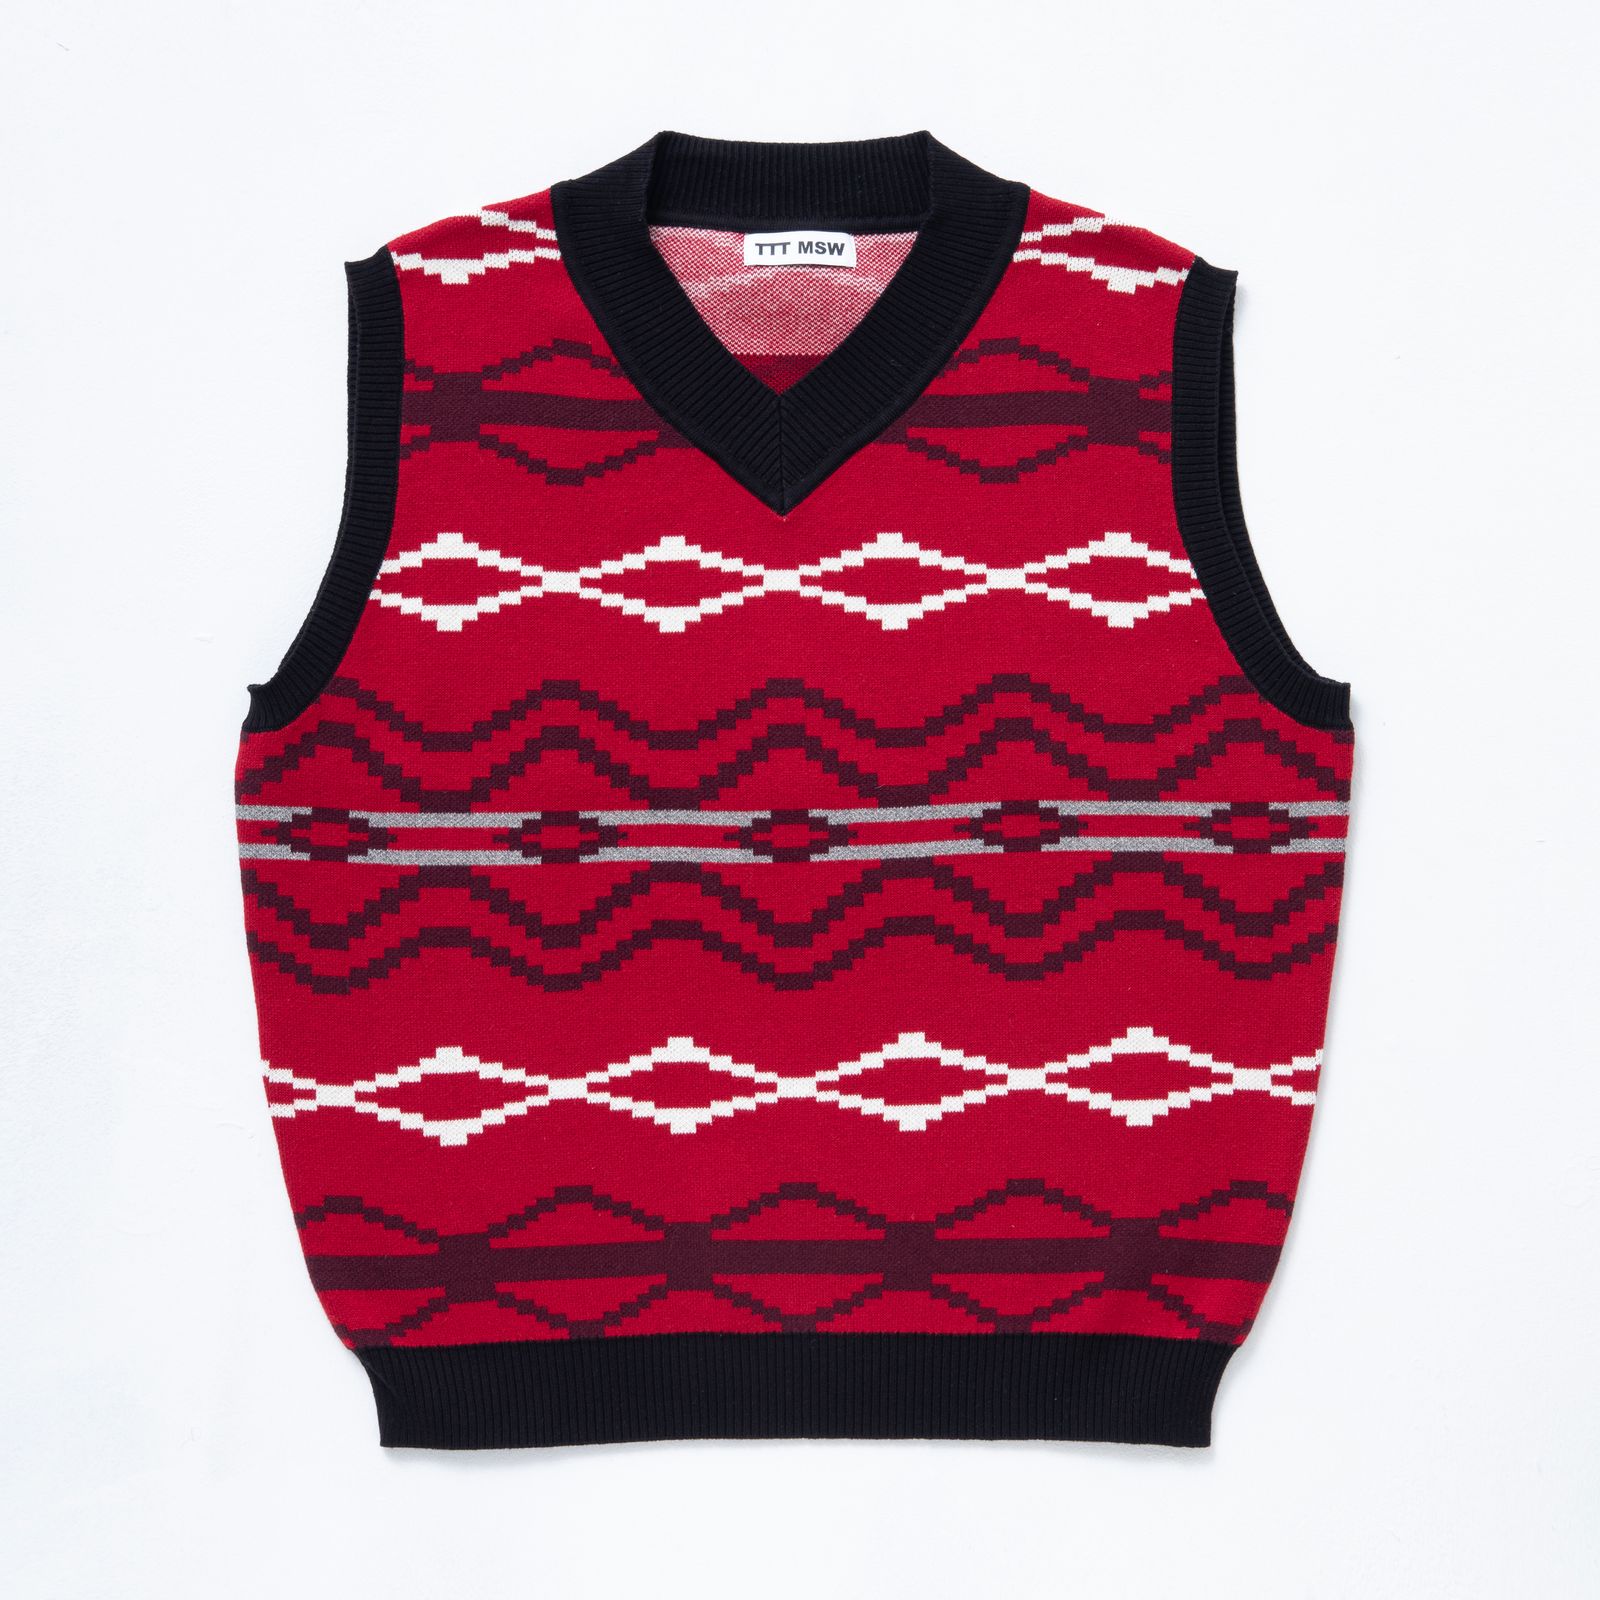 TTT MSW - 【残り一点】Nordic Knit Vest Red | ACRMTSM ONLINE STORE